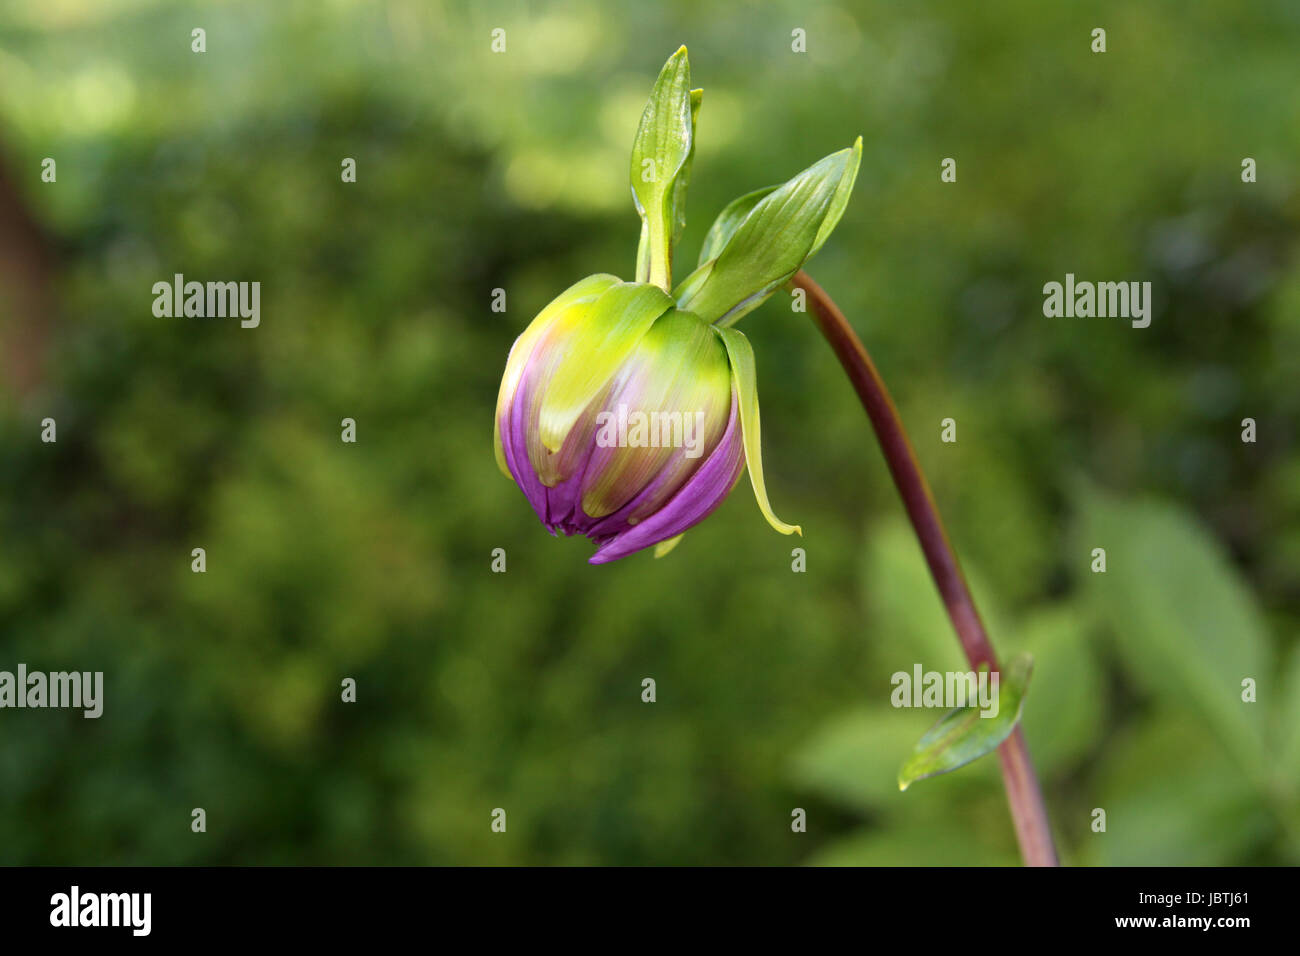 Emerging purple Dahlia flower bulb with beautiful blurred background Stock Photo